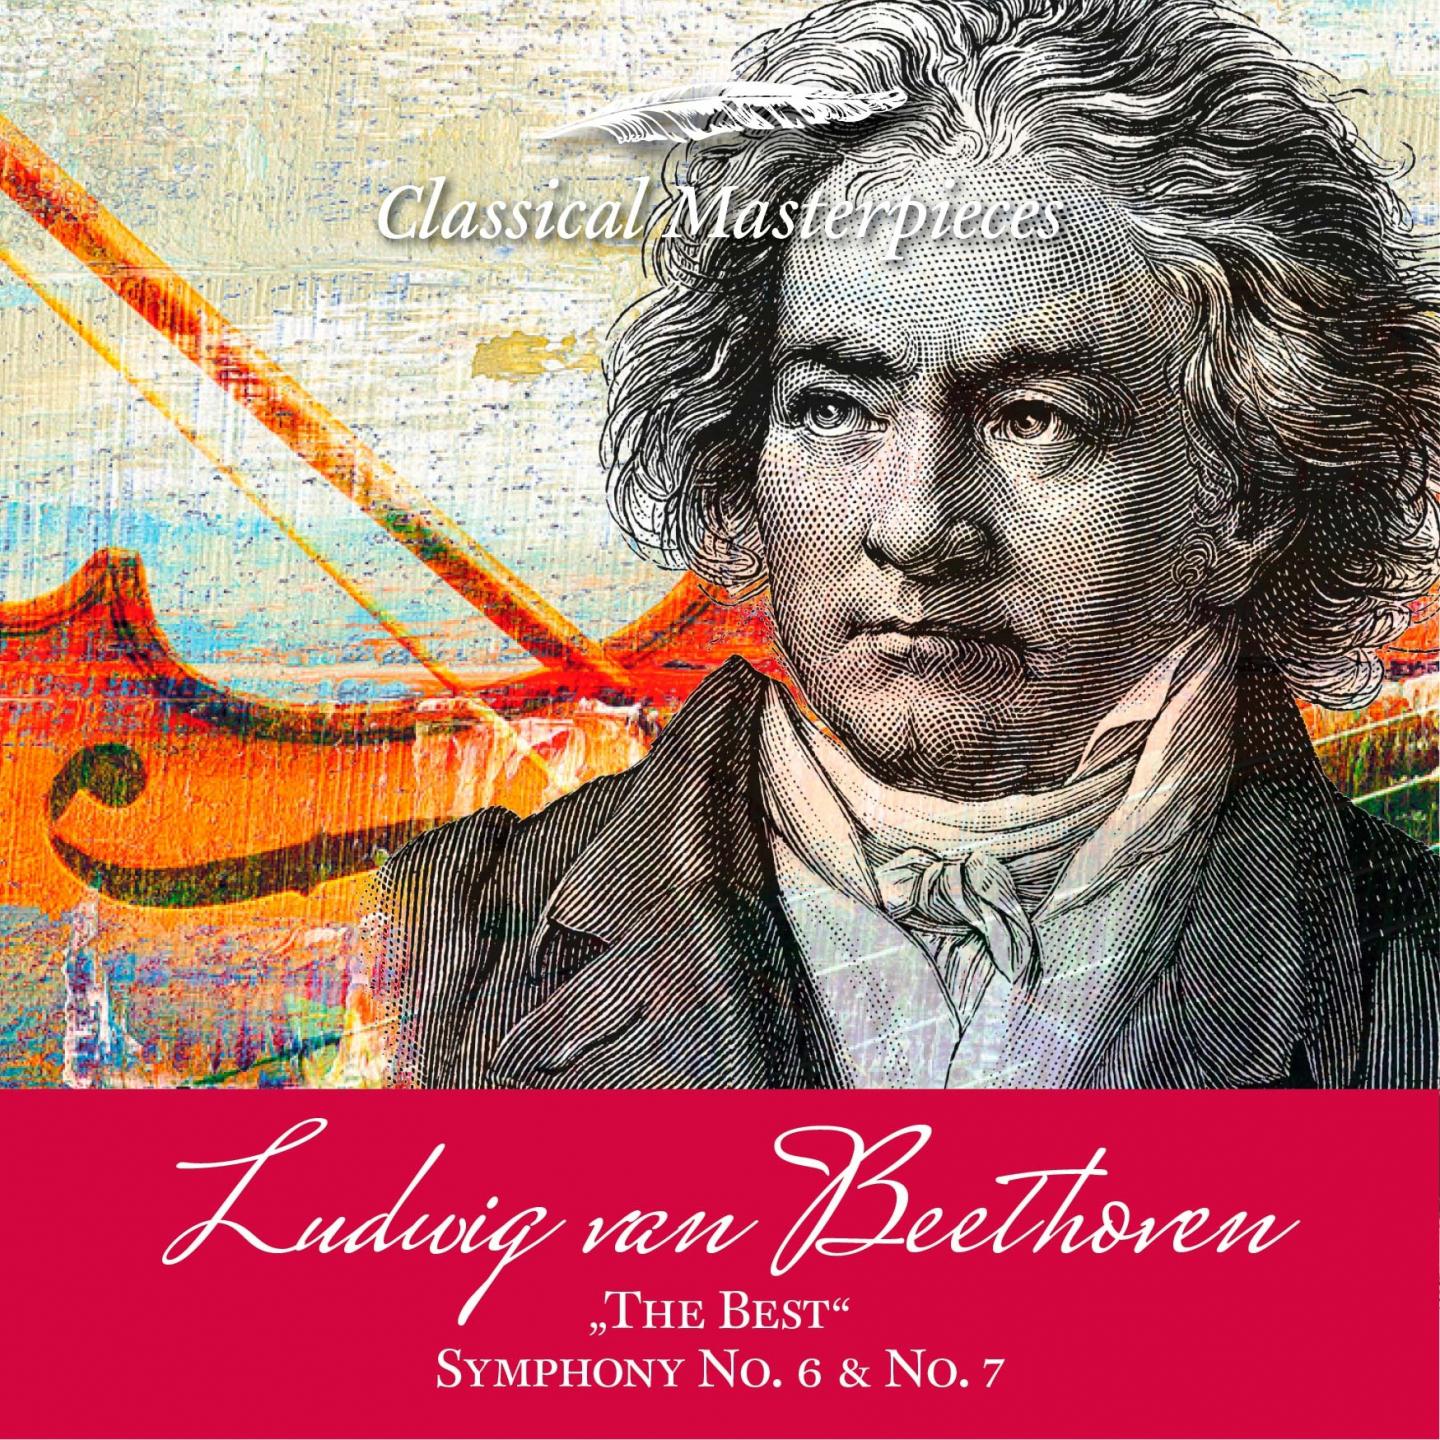 Ludwig van Beethoven "The Best" Symphony No. 6 & 7